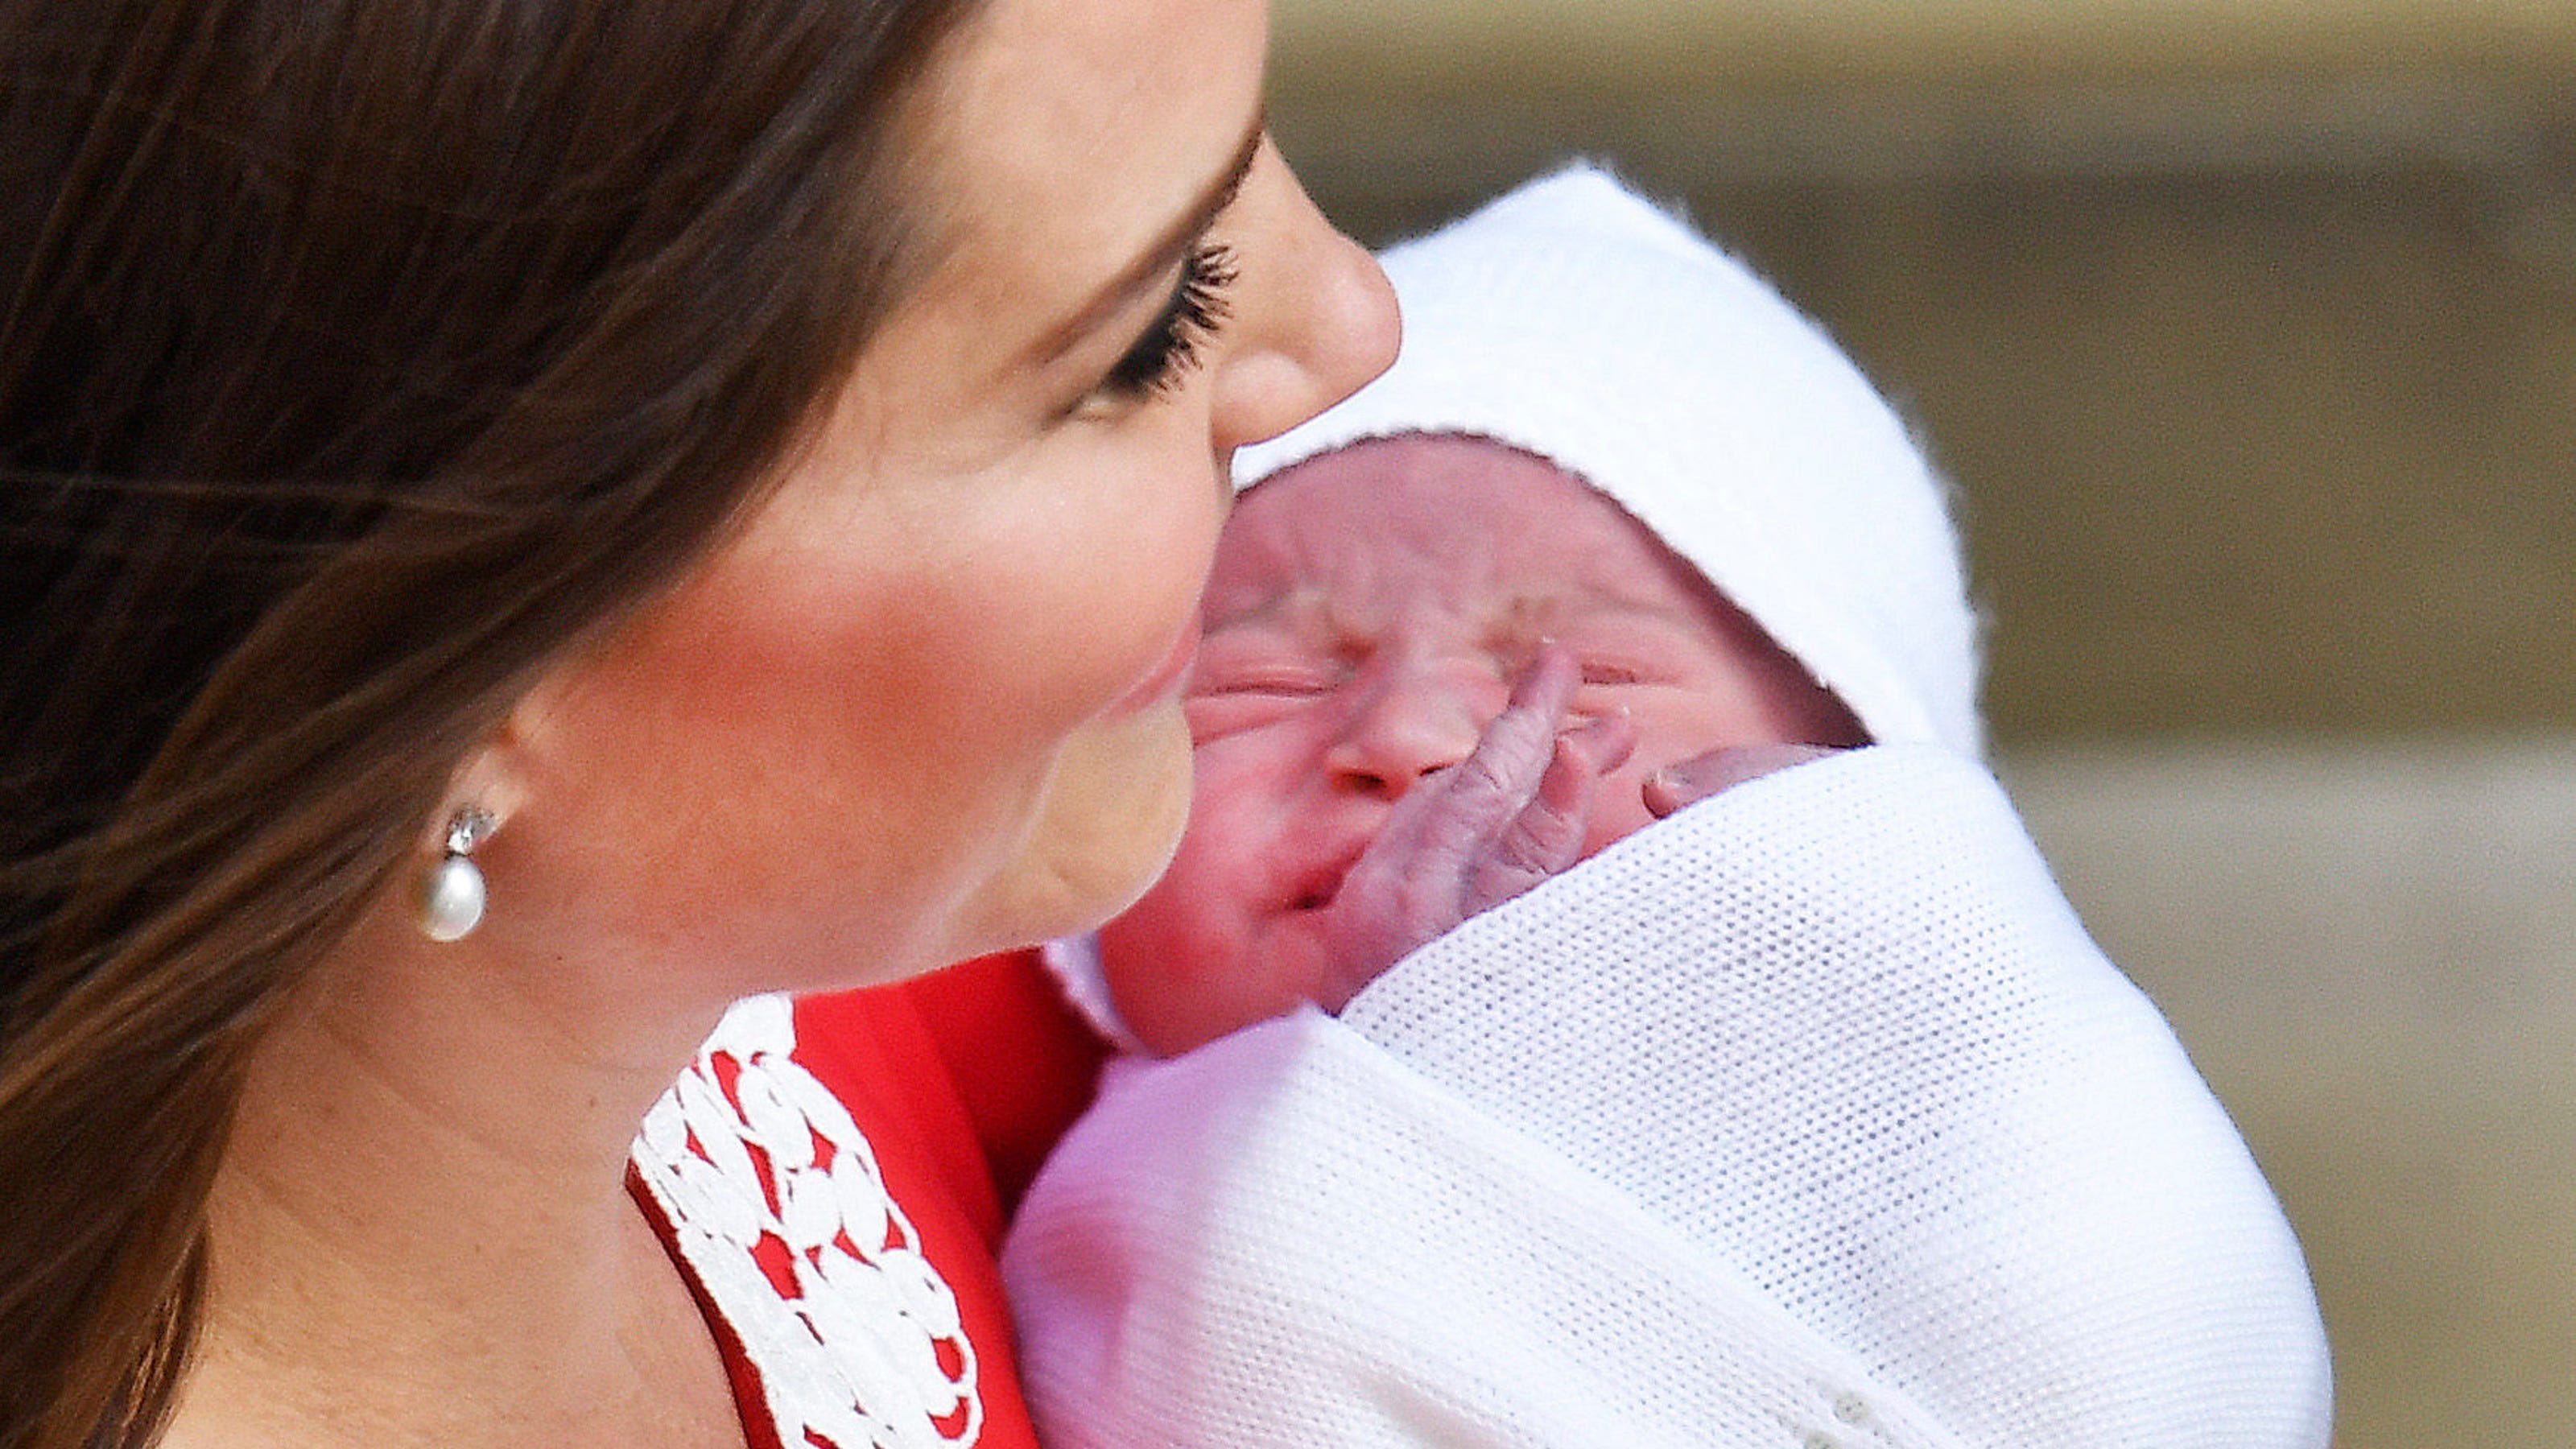 Royal baby name revealed: Louis Arthur Charles